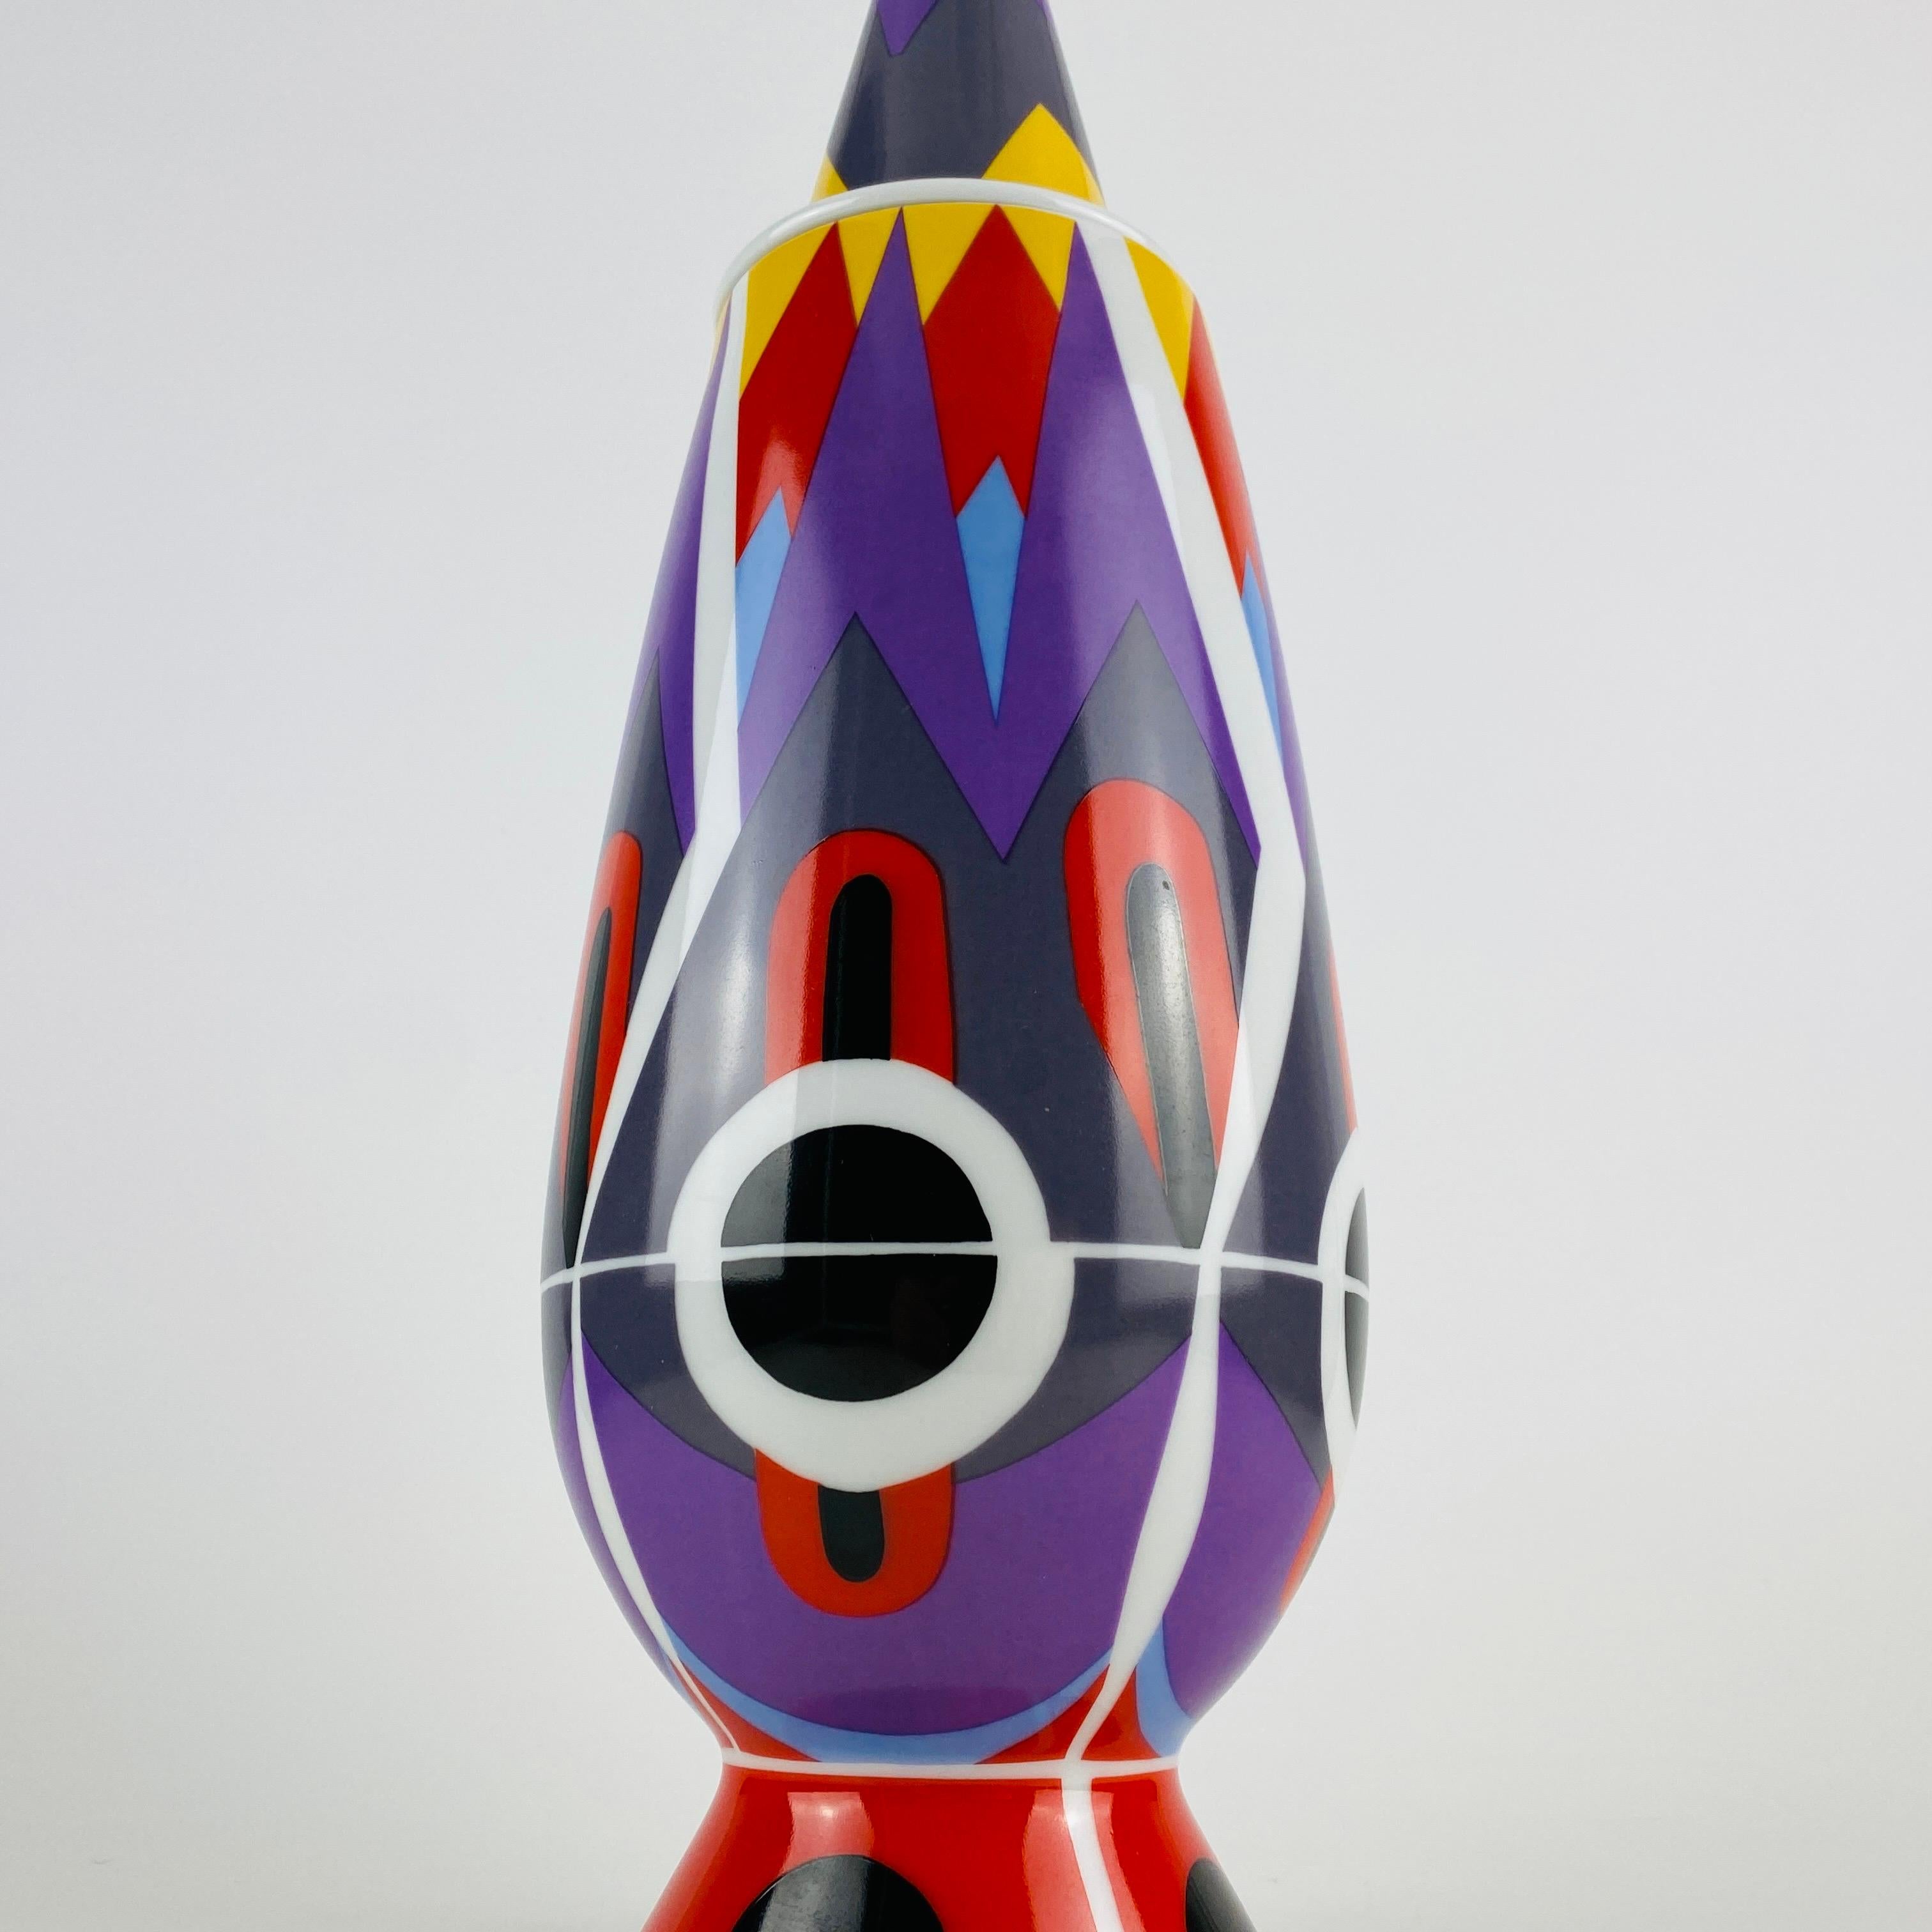 Alessi Tendentse Vase by Robert Venturi for A. Mendini 100% Make-Up Serie N90 3